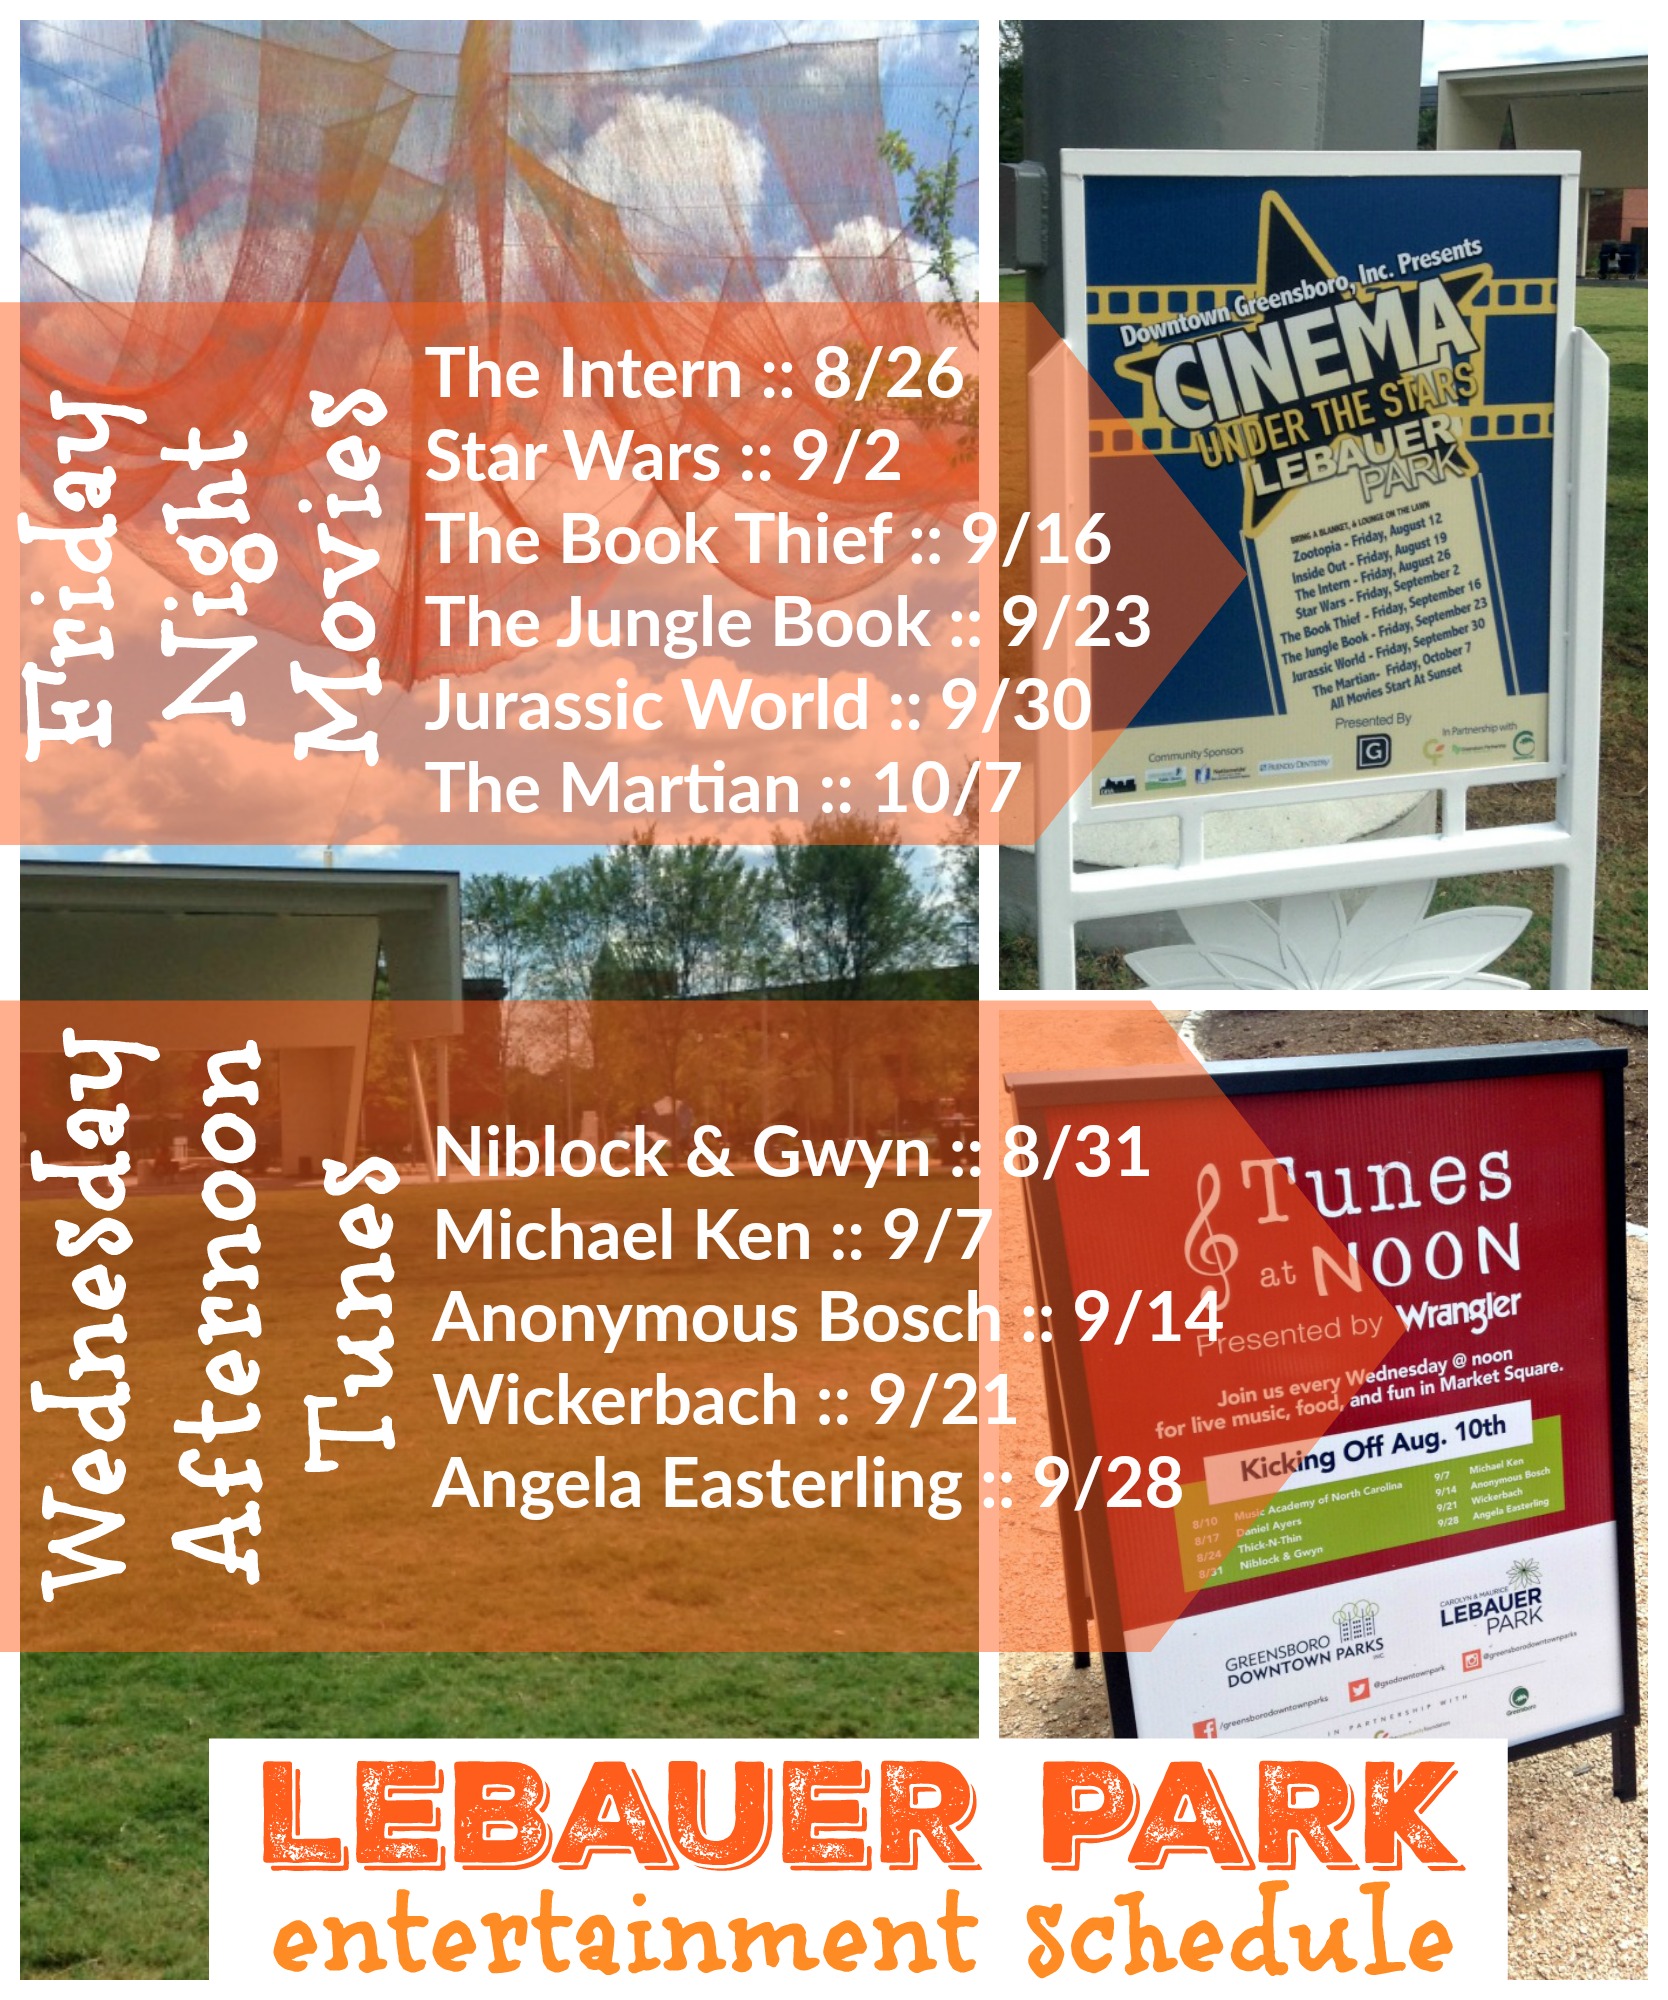 LeBauer Park Entertainment Schedule